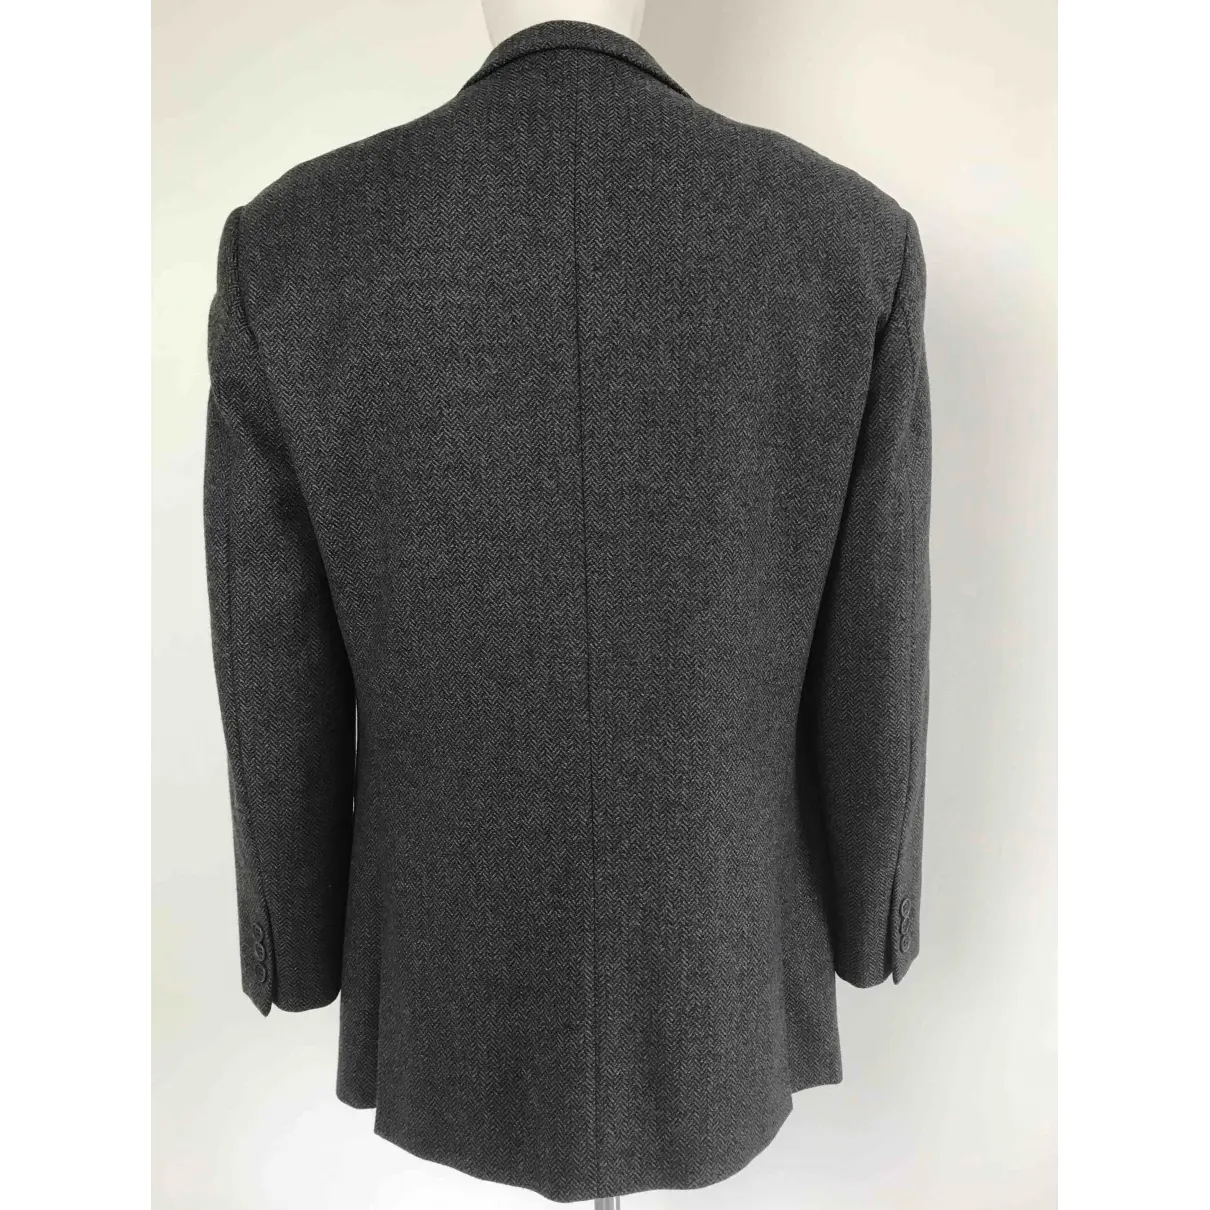 Buy Emporio Armani Wool vest online